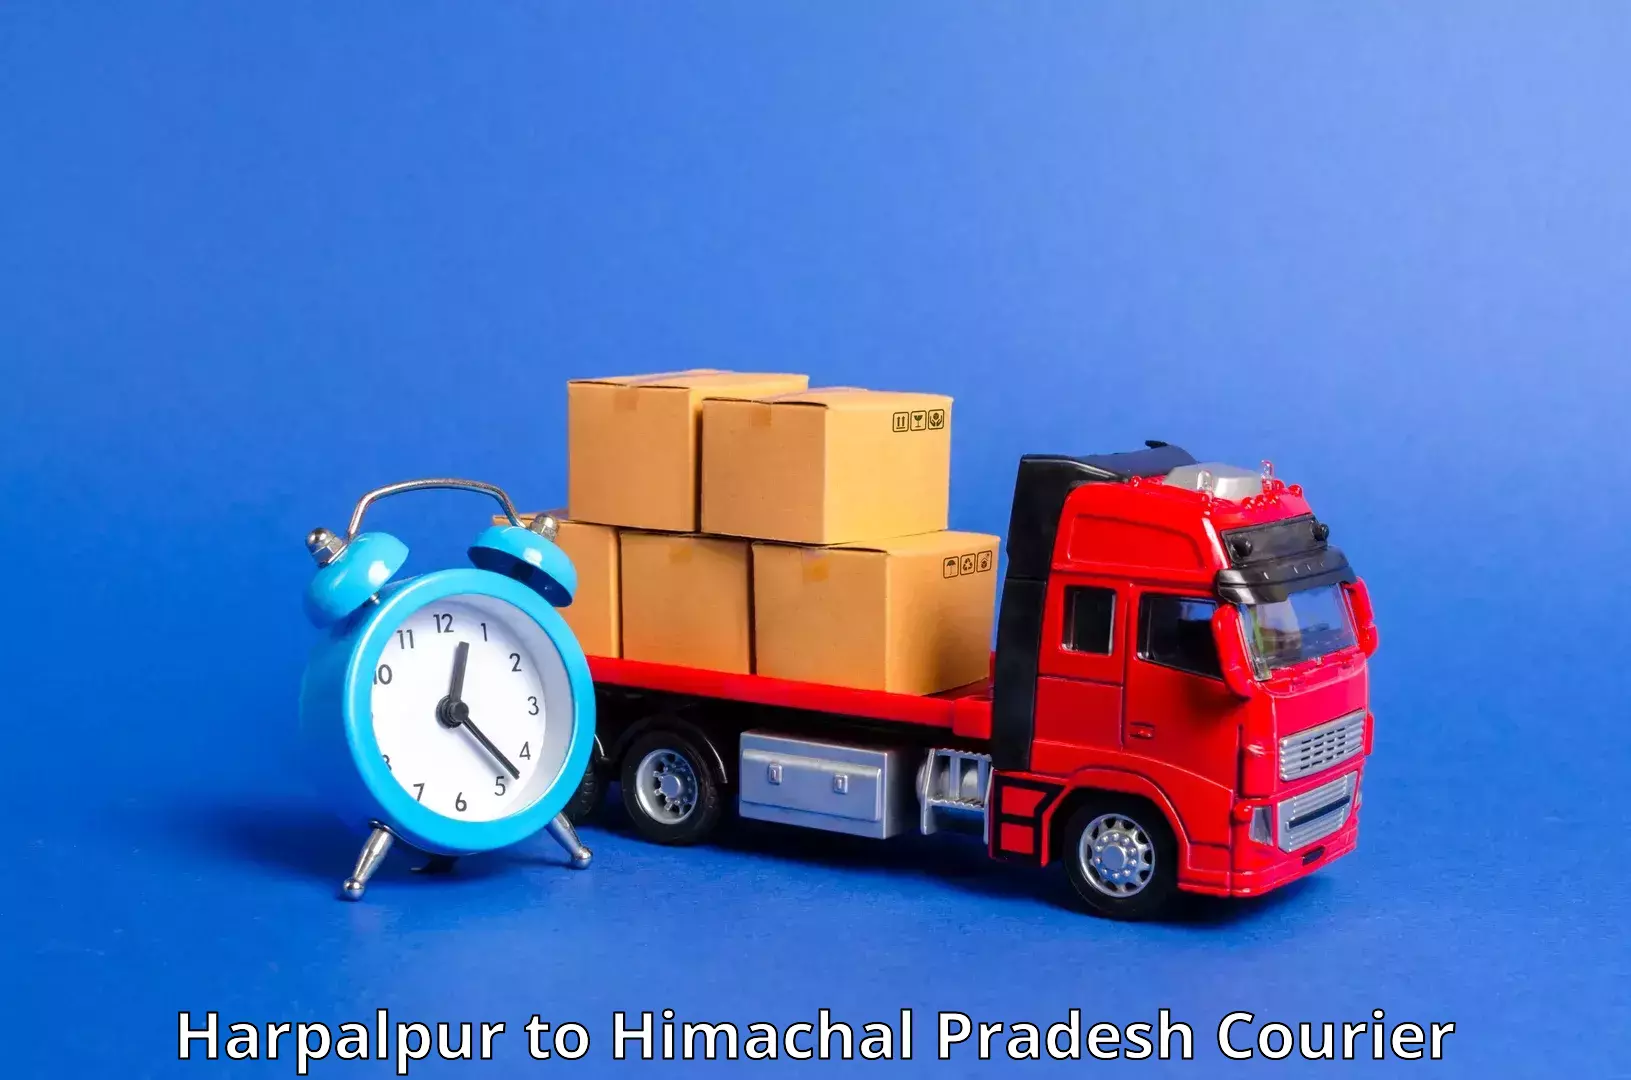 Efficient order fulfillment Harpalpur to Nurpur